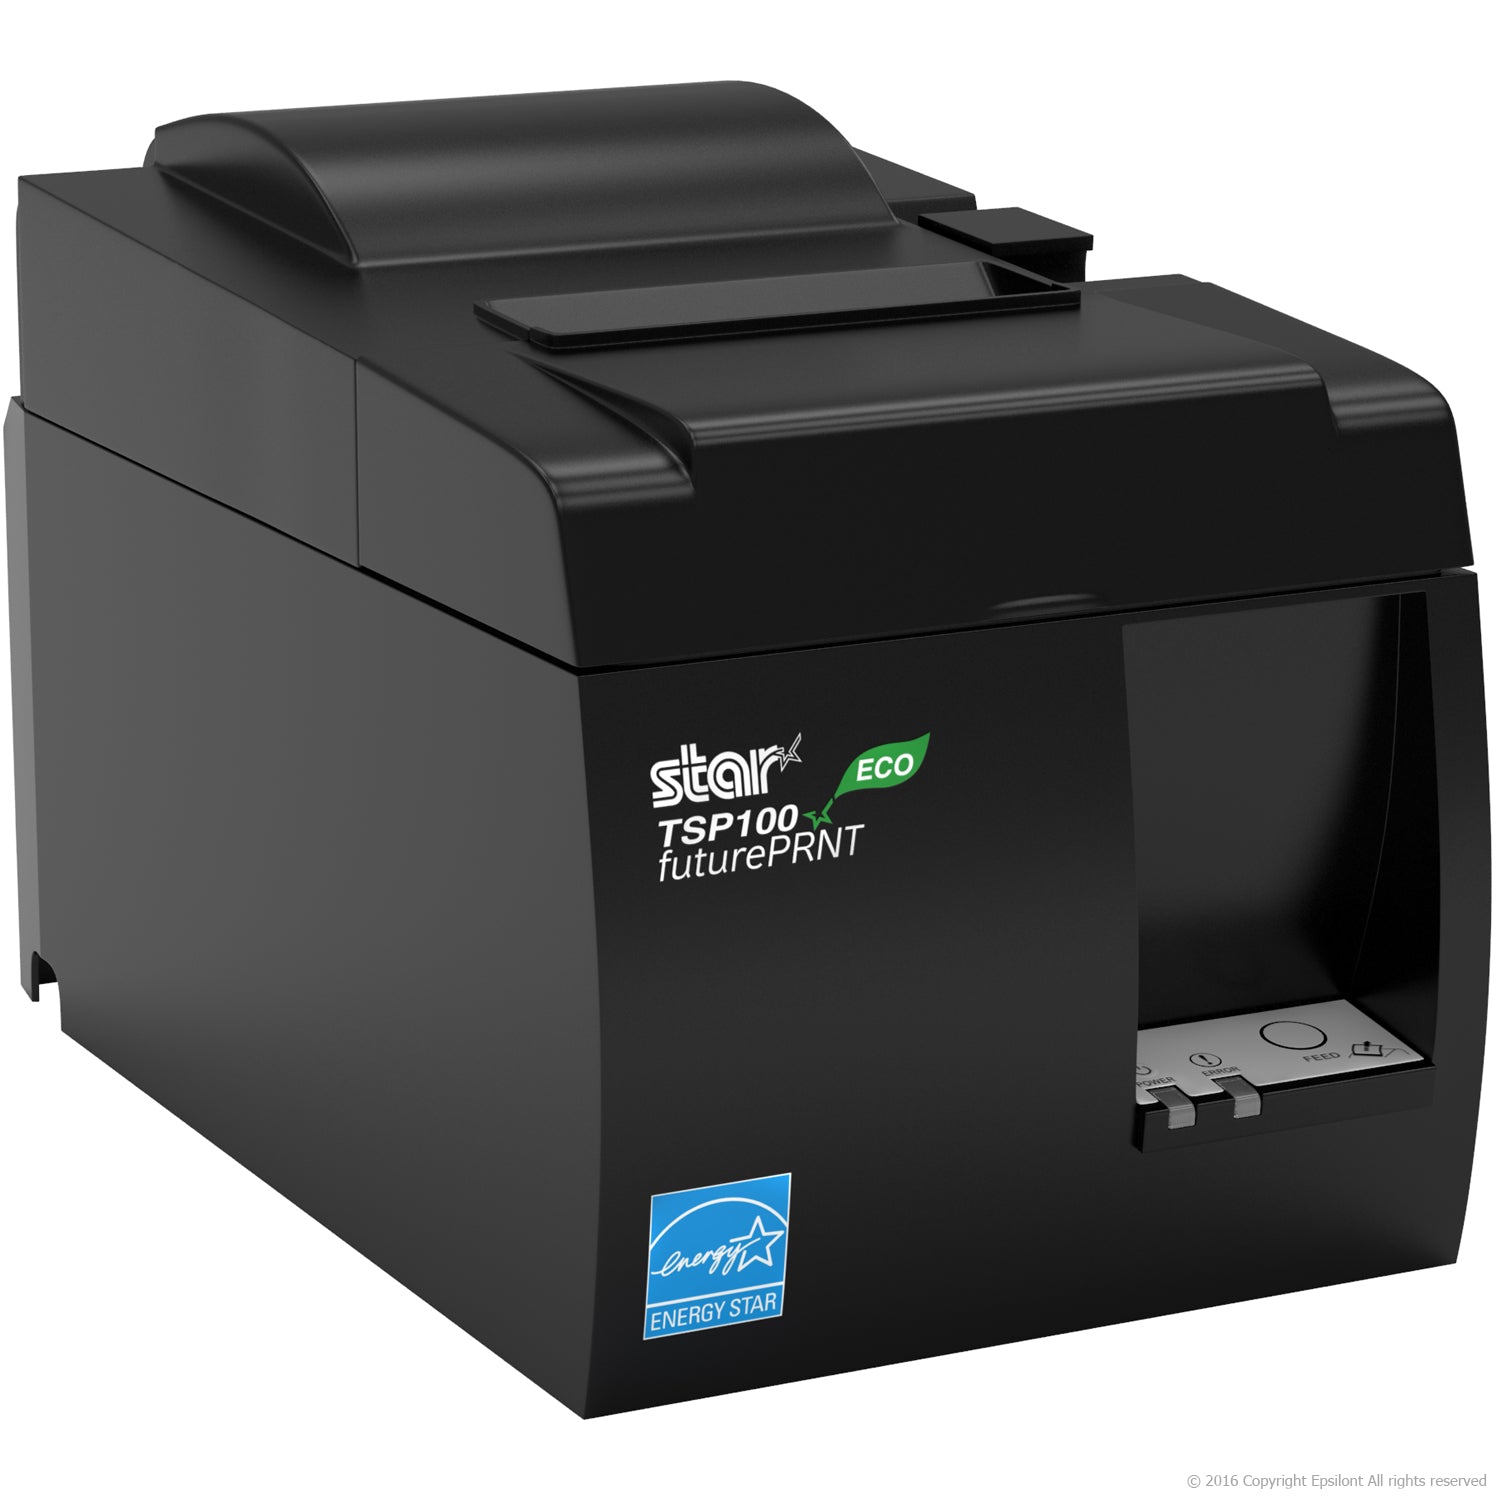 MINI SQUARE REGISTER Star TSP100 USB Receipt Printer, 13" Cash Drawe